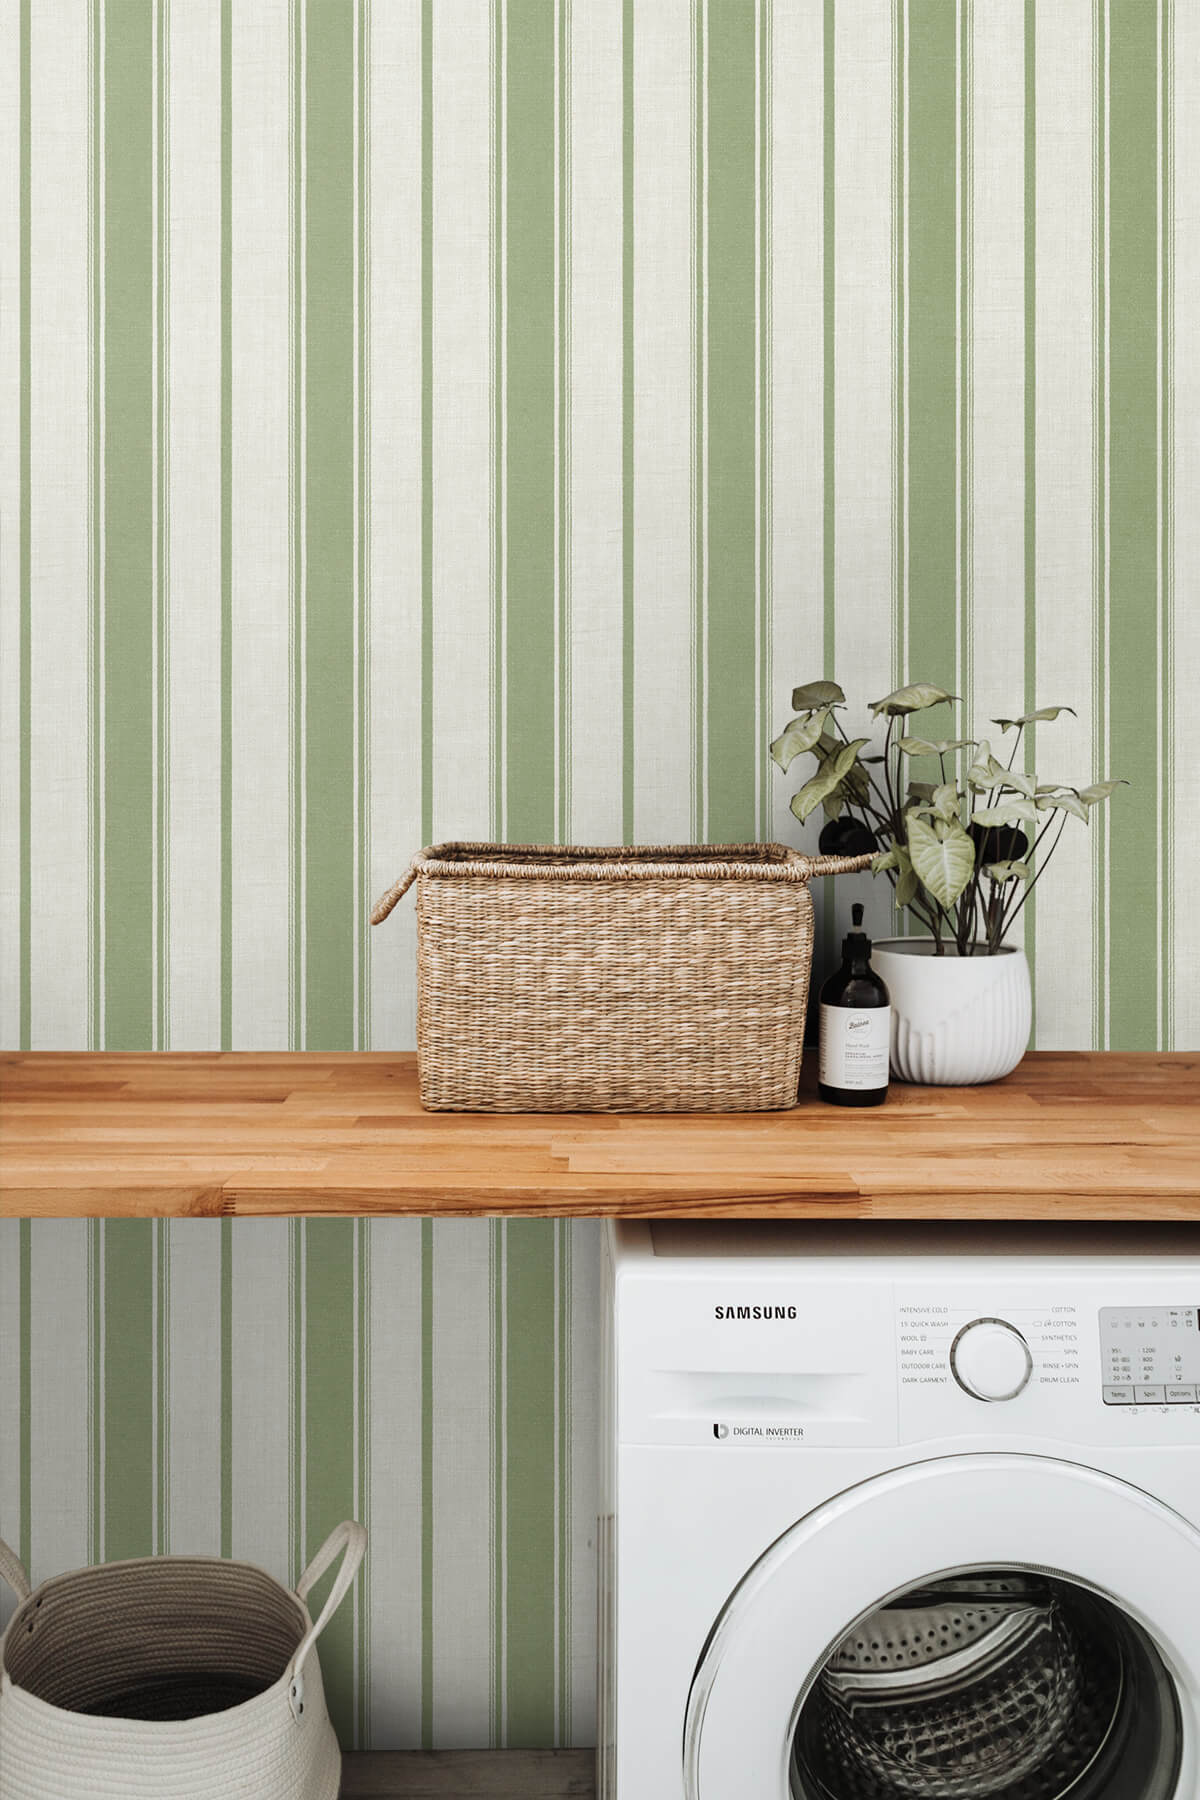 Seabrook French Country Eliott Linen Stripe Wallpaper - Pomme